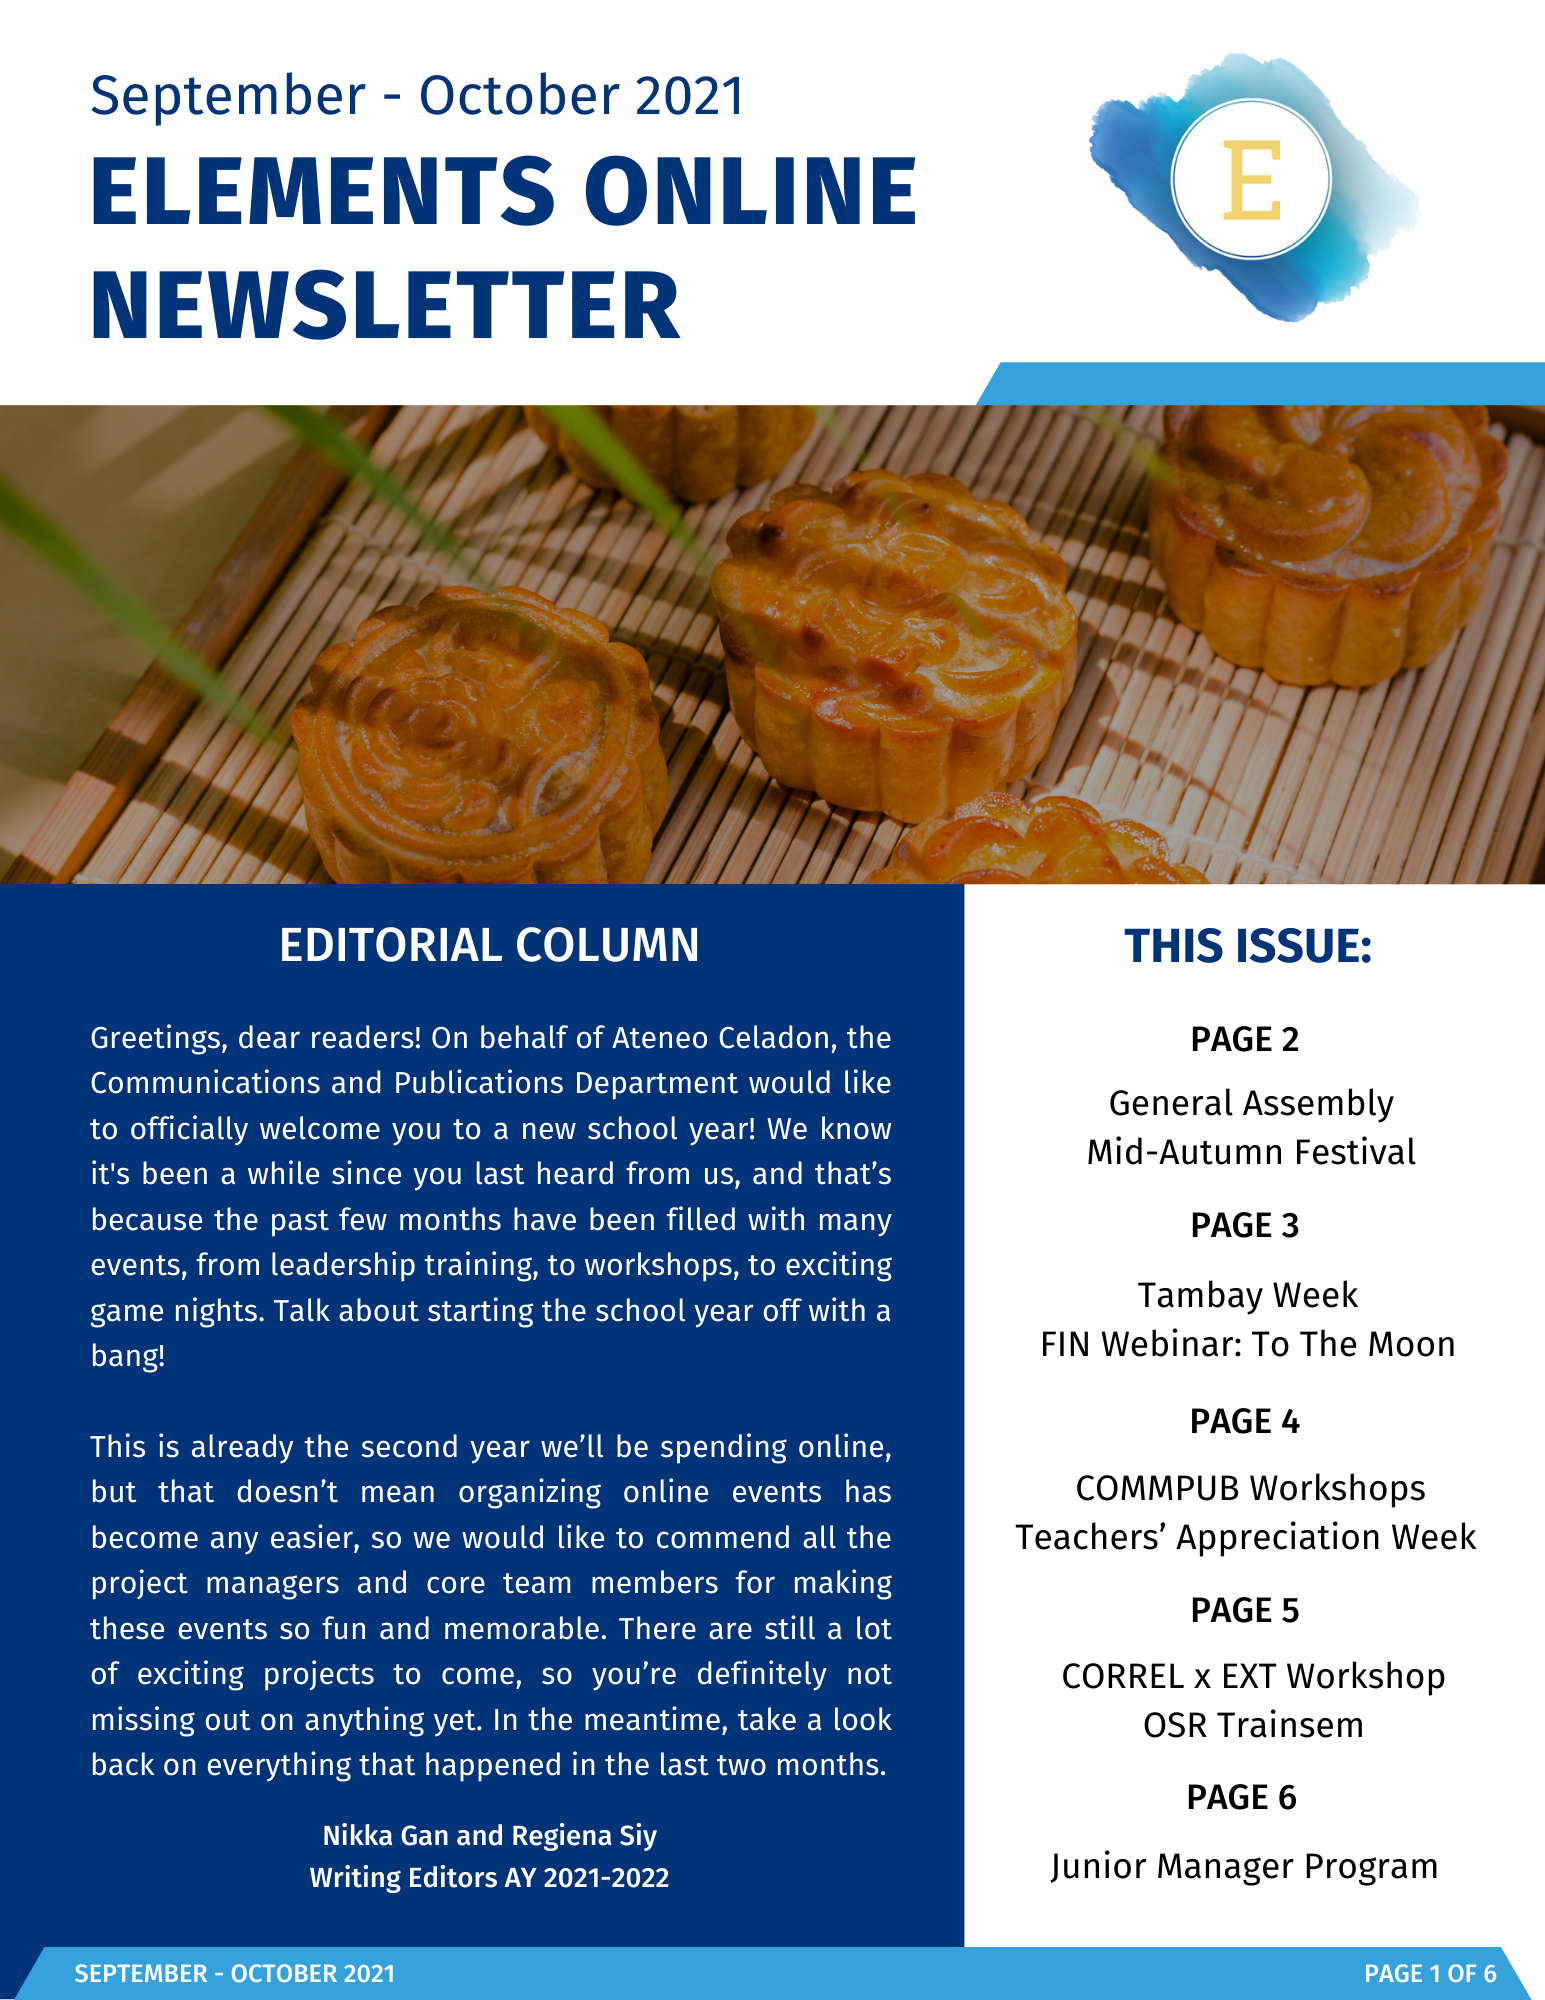 Elements Online Newsletter: September & October 2021